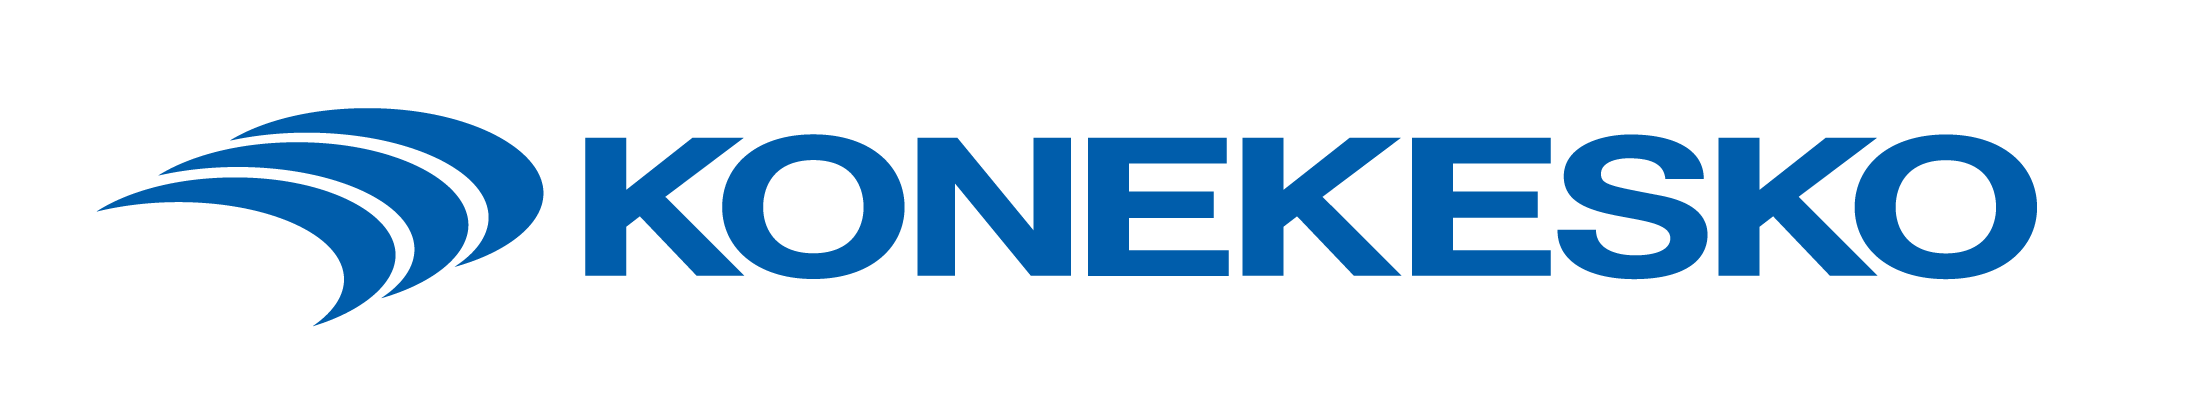 konekesko-logo